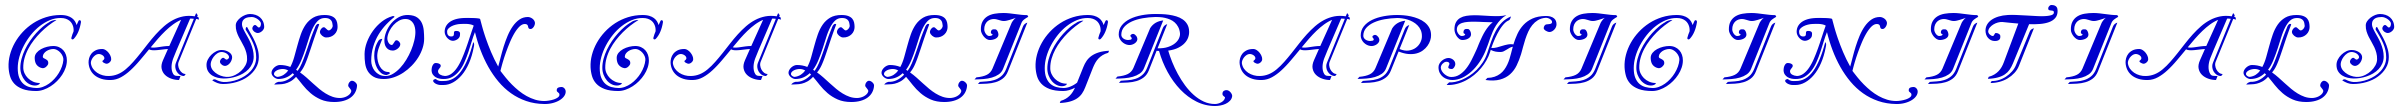 Caslon Calligraphic Initials Schriftart